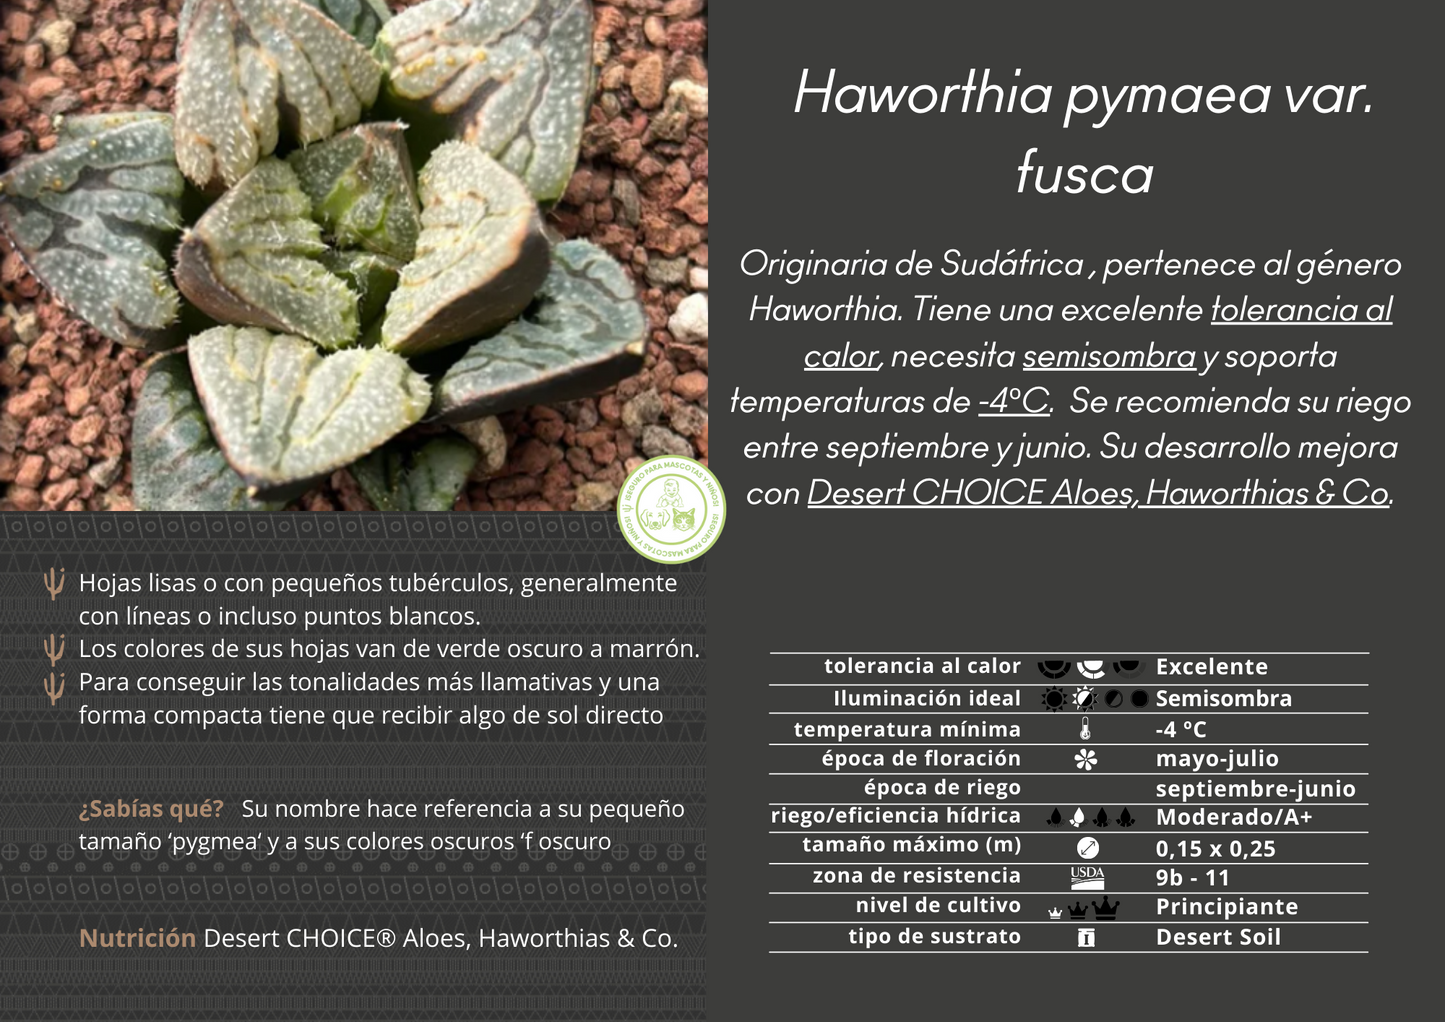 Haworthia pymaea var. fusca